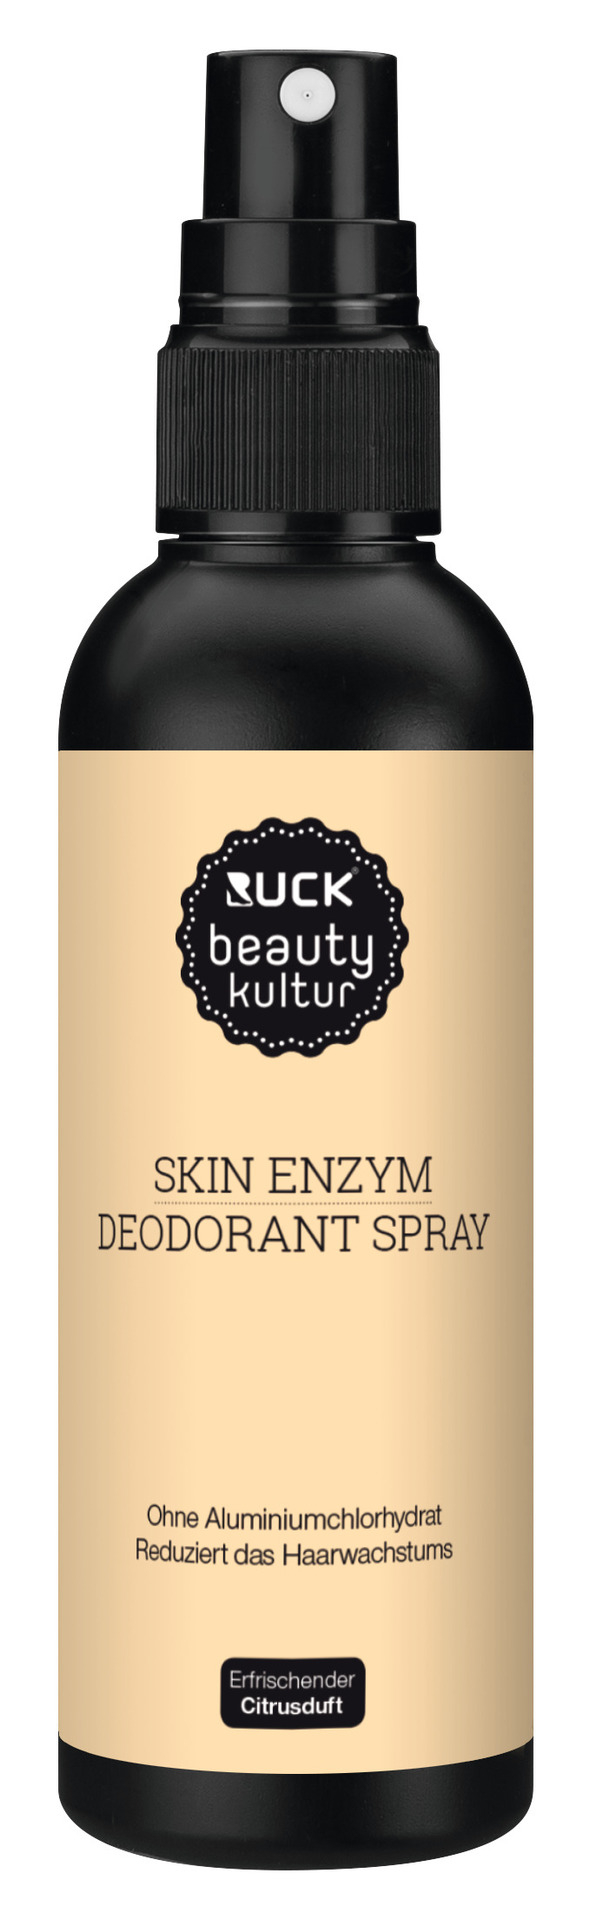 RUCK beautykultur SKIN Enzym Deodorant Spray | 100 ml